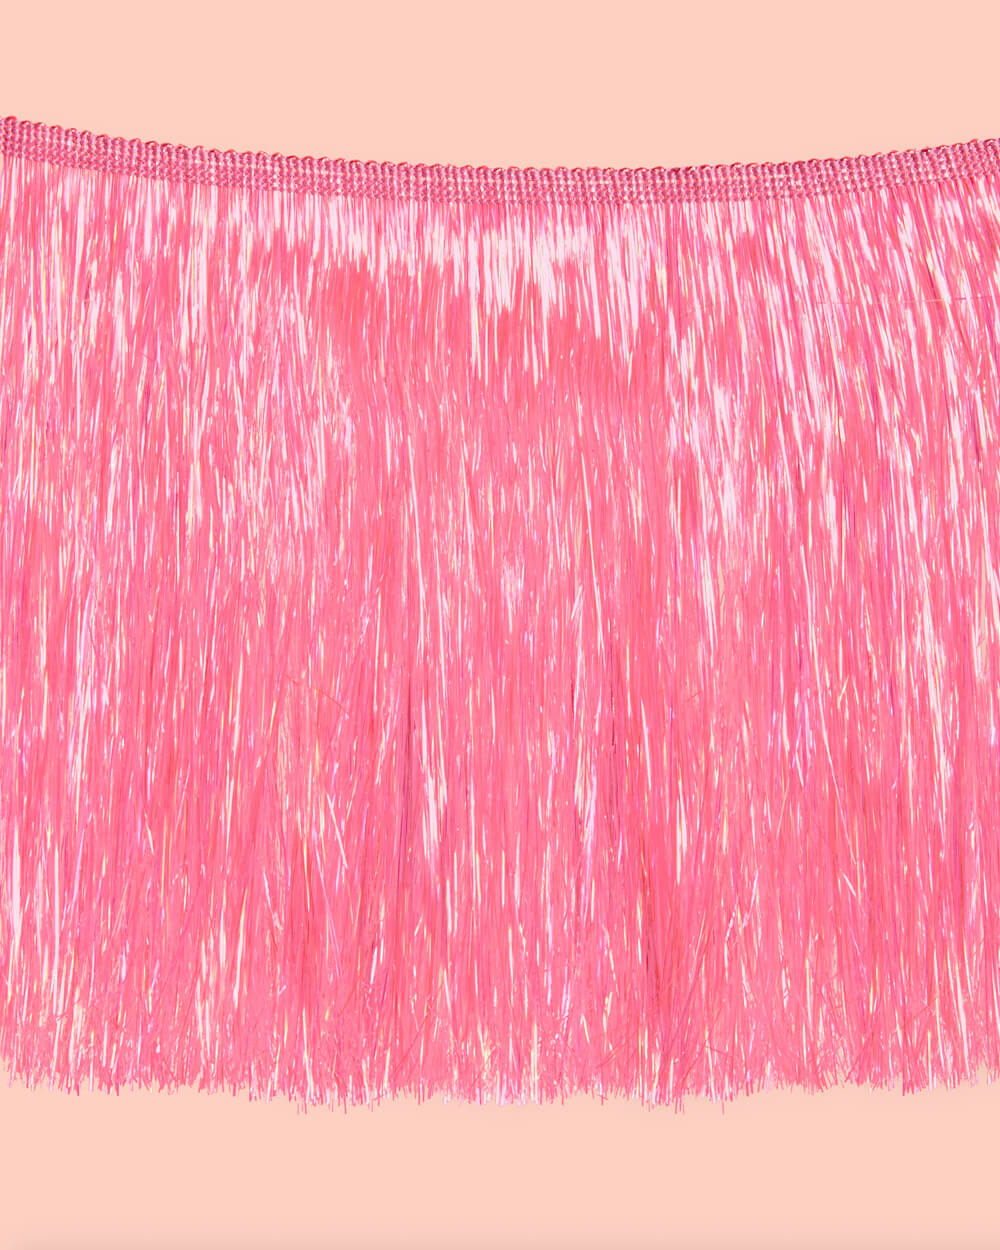 Let's Go Party Fringe - pink iridescent banner